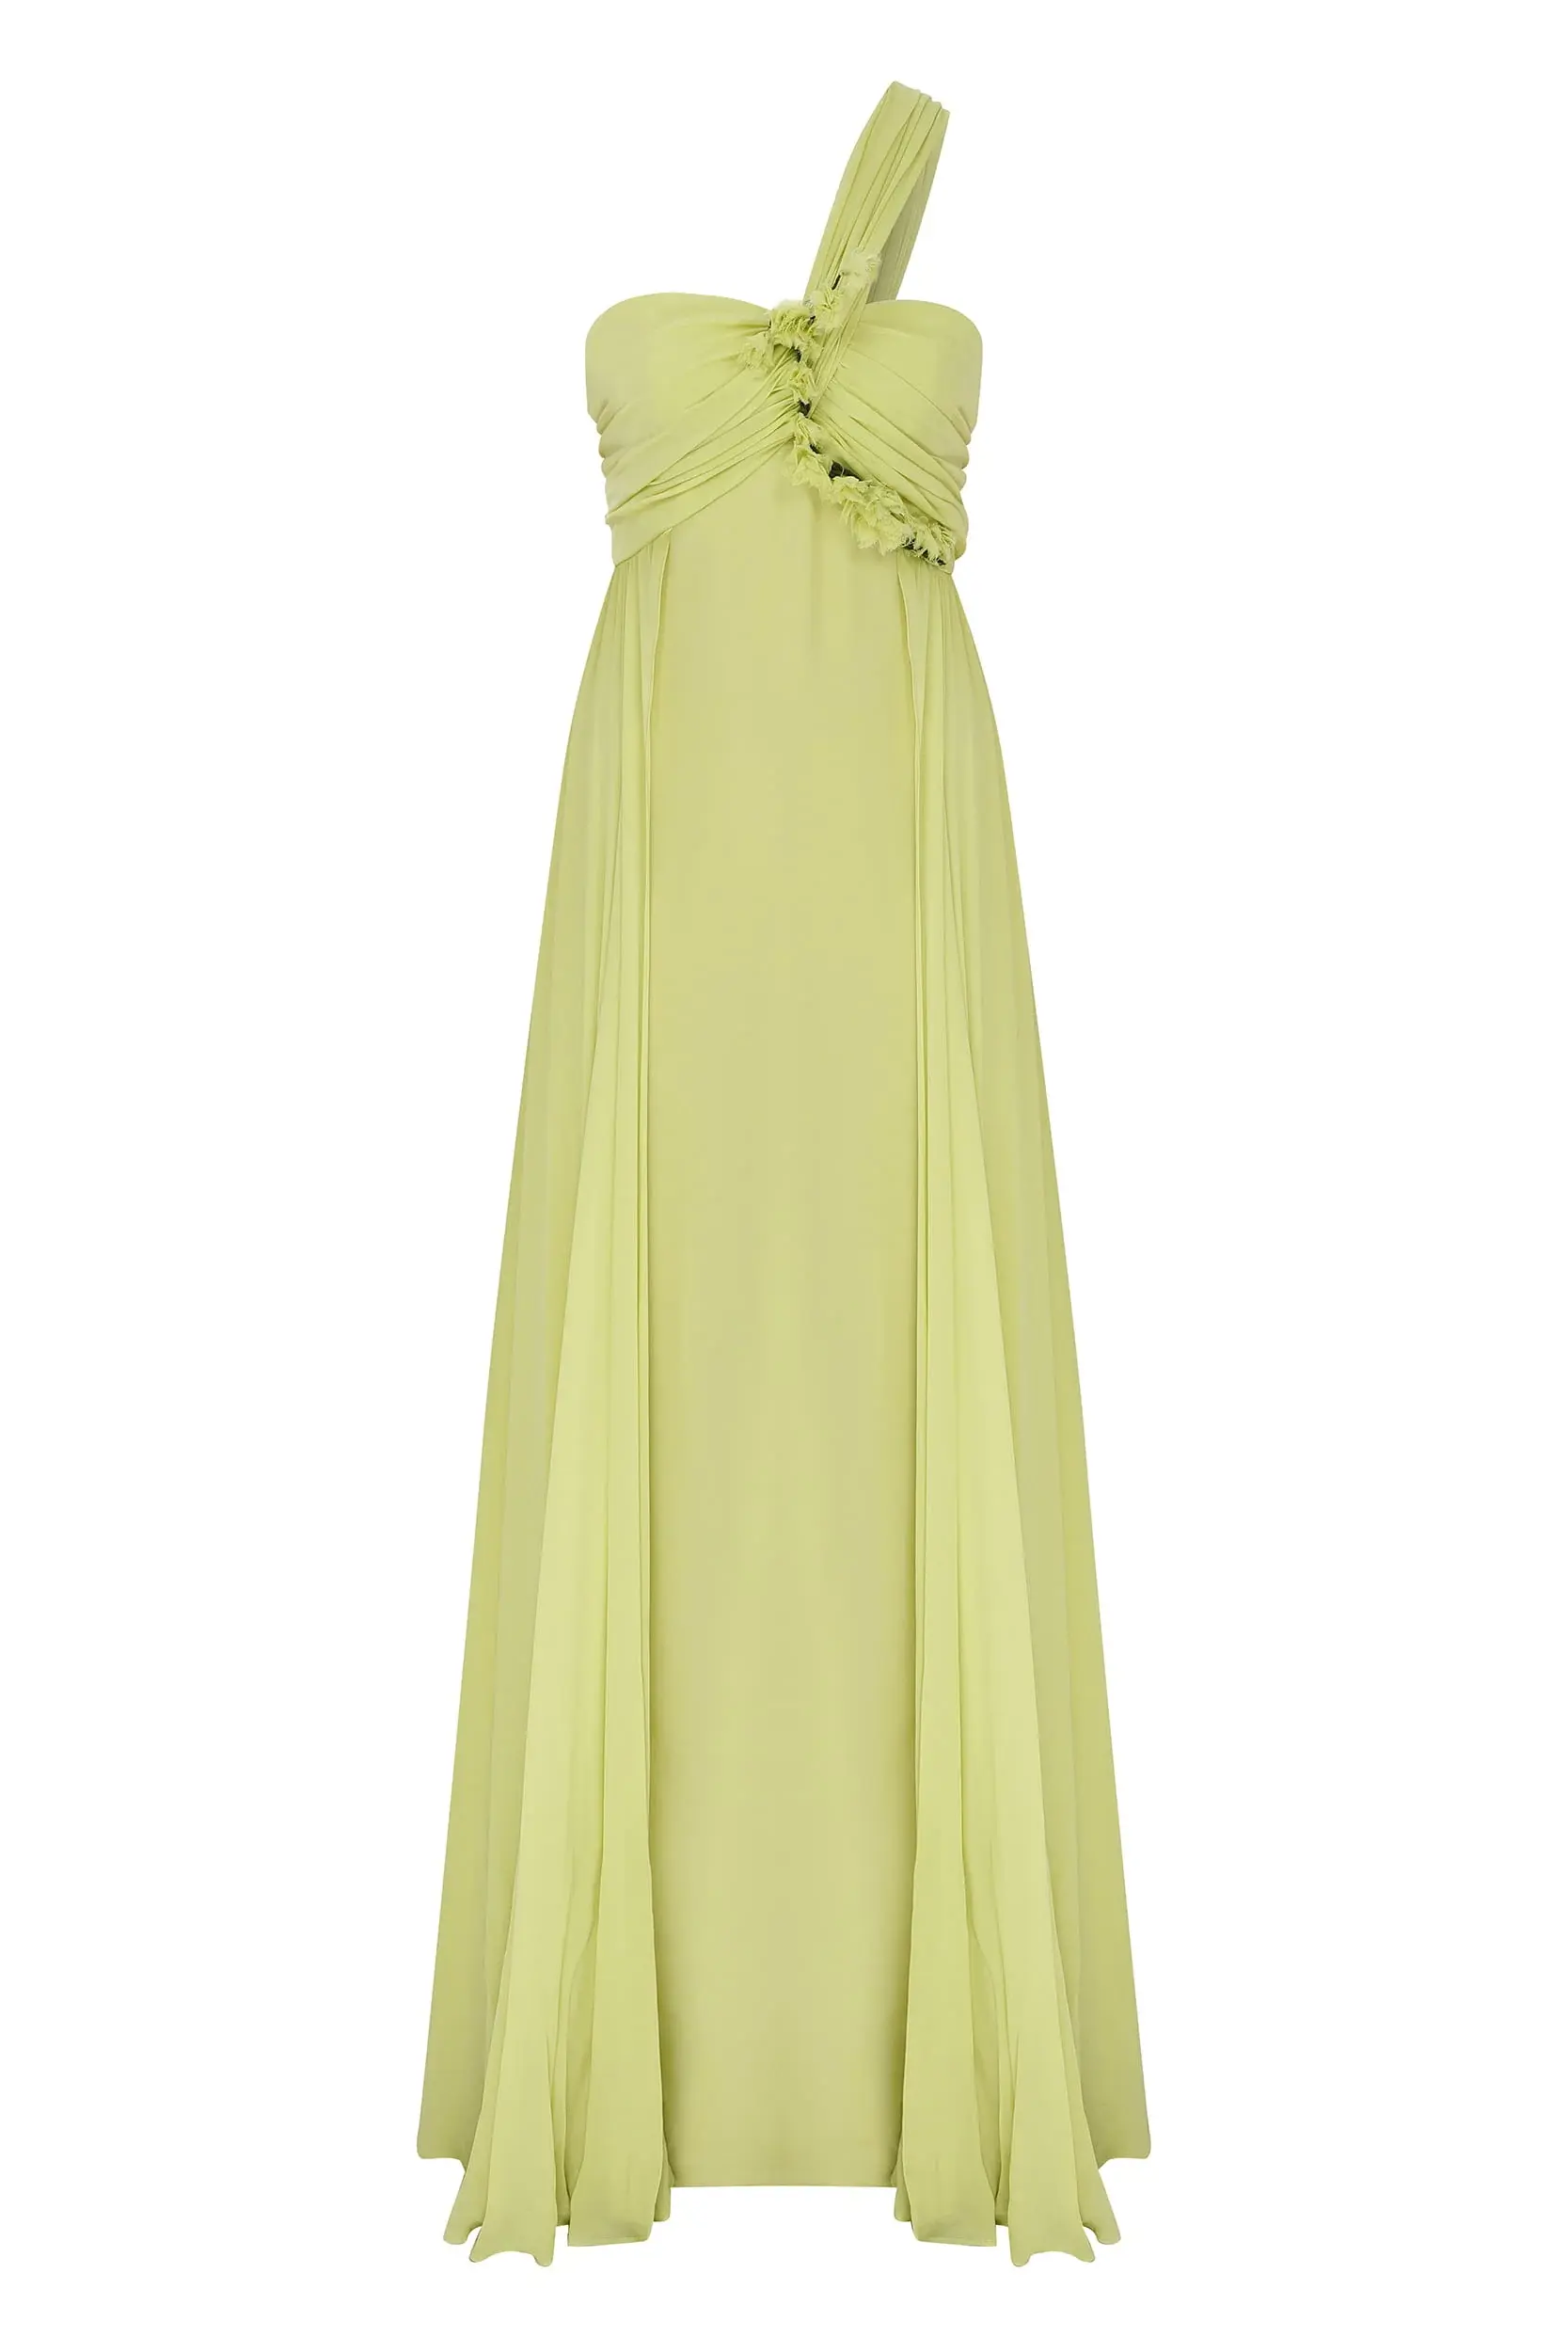 Roman Glamorous Halter Neck Evening Dress - 2 / Yellow. 1